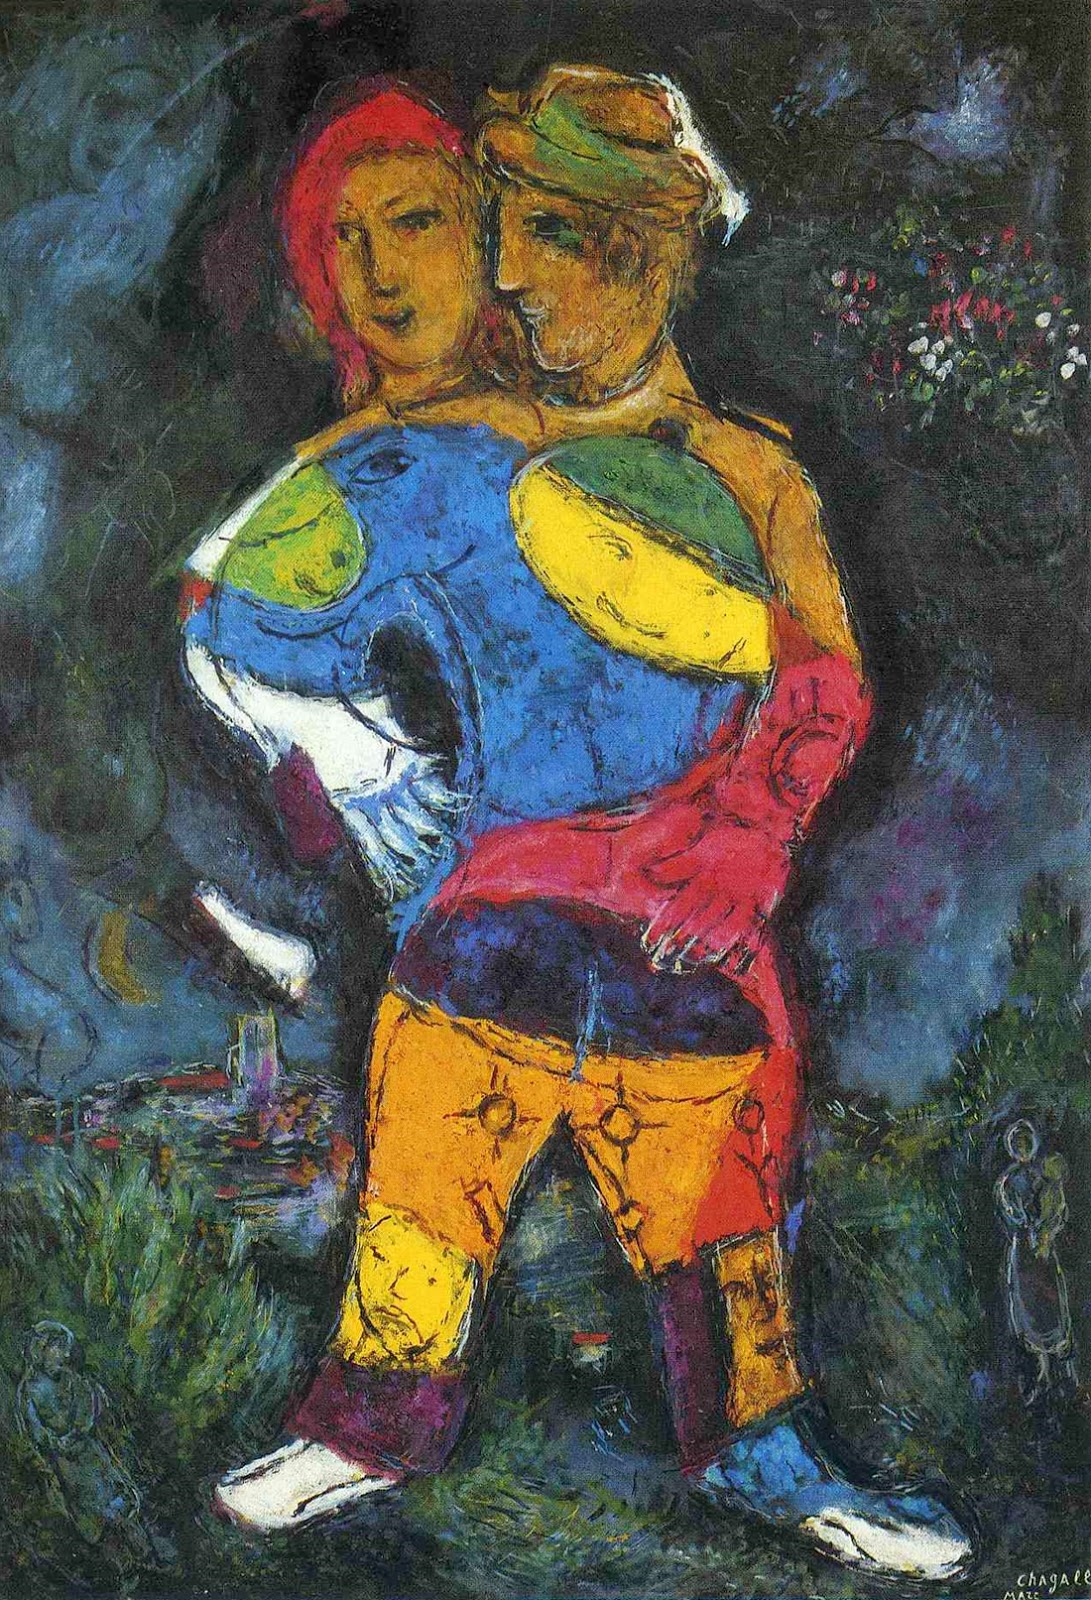 Marc+Chagall-1887-1985 (152).jpg